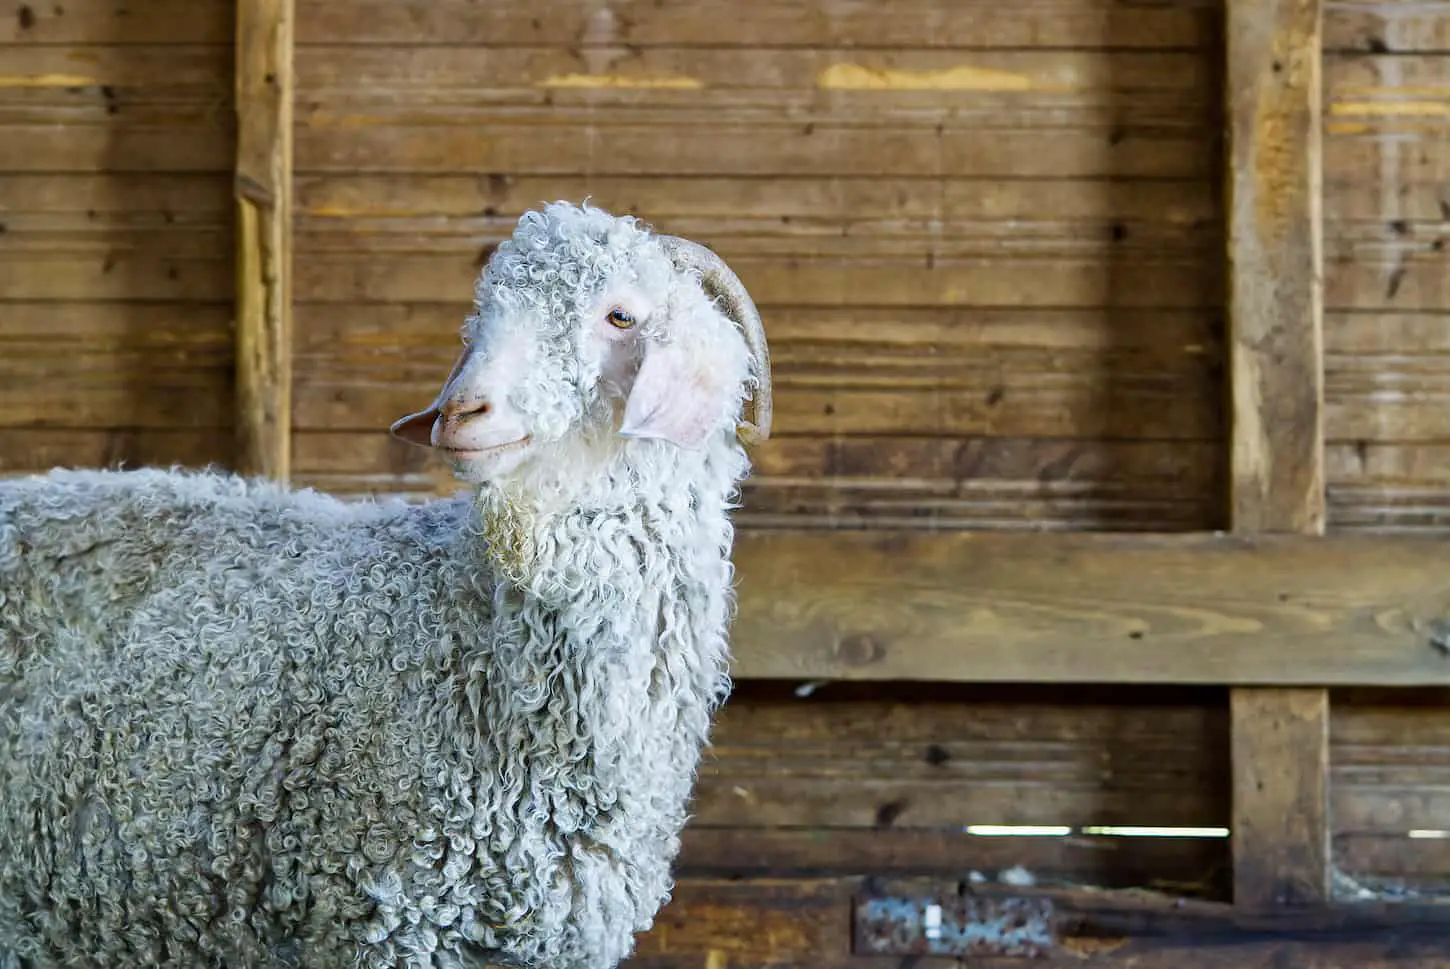 Should Goats Be Locked Up At Night?